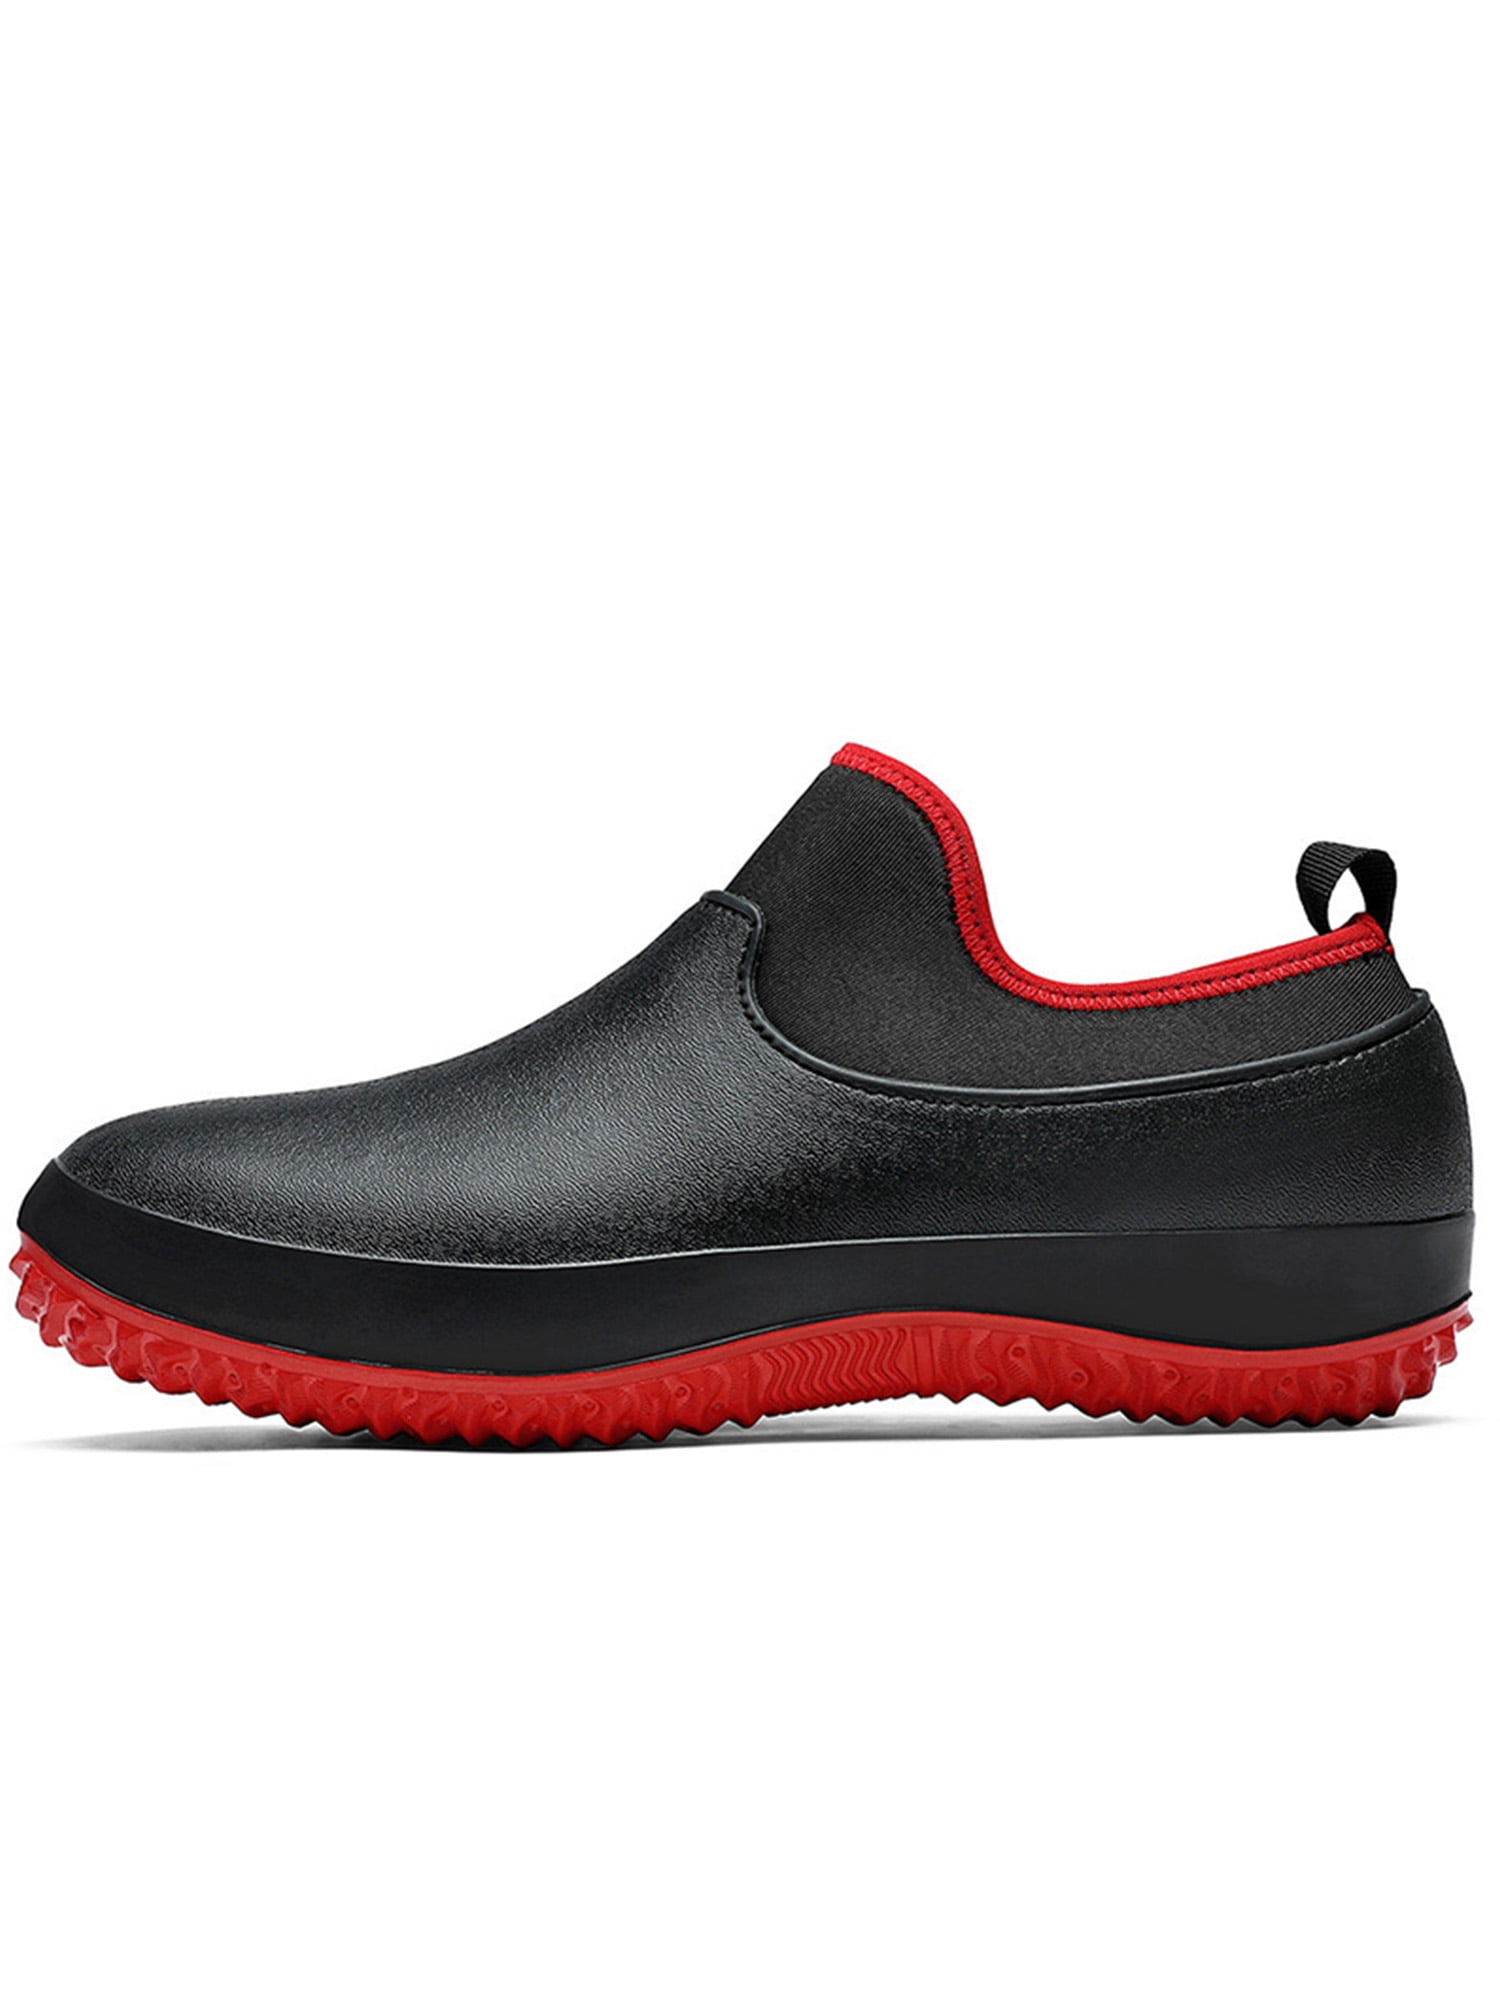 Men's Kitchen Steel Toe Safety Chef Shoes Slip Resistance Waterproof Work Boots 